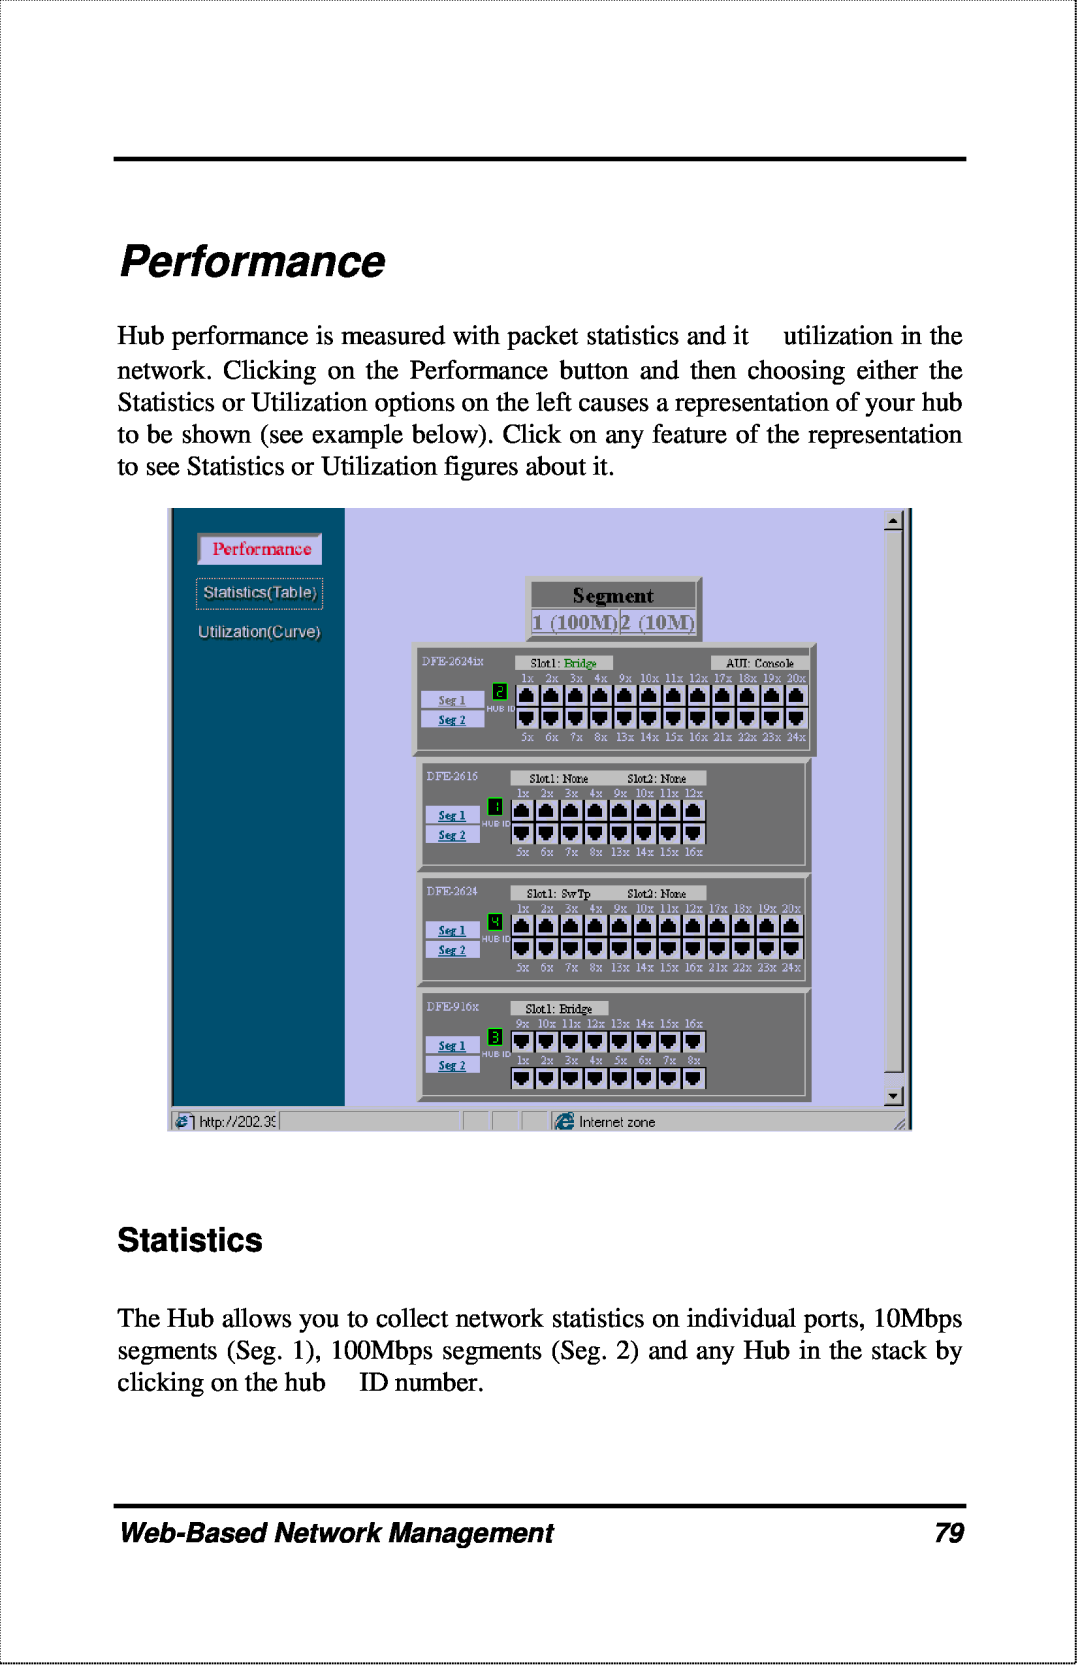 D-Link DFE-2600 manual Performance, Statistics, Web-Based Network Management 